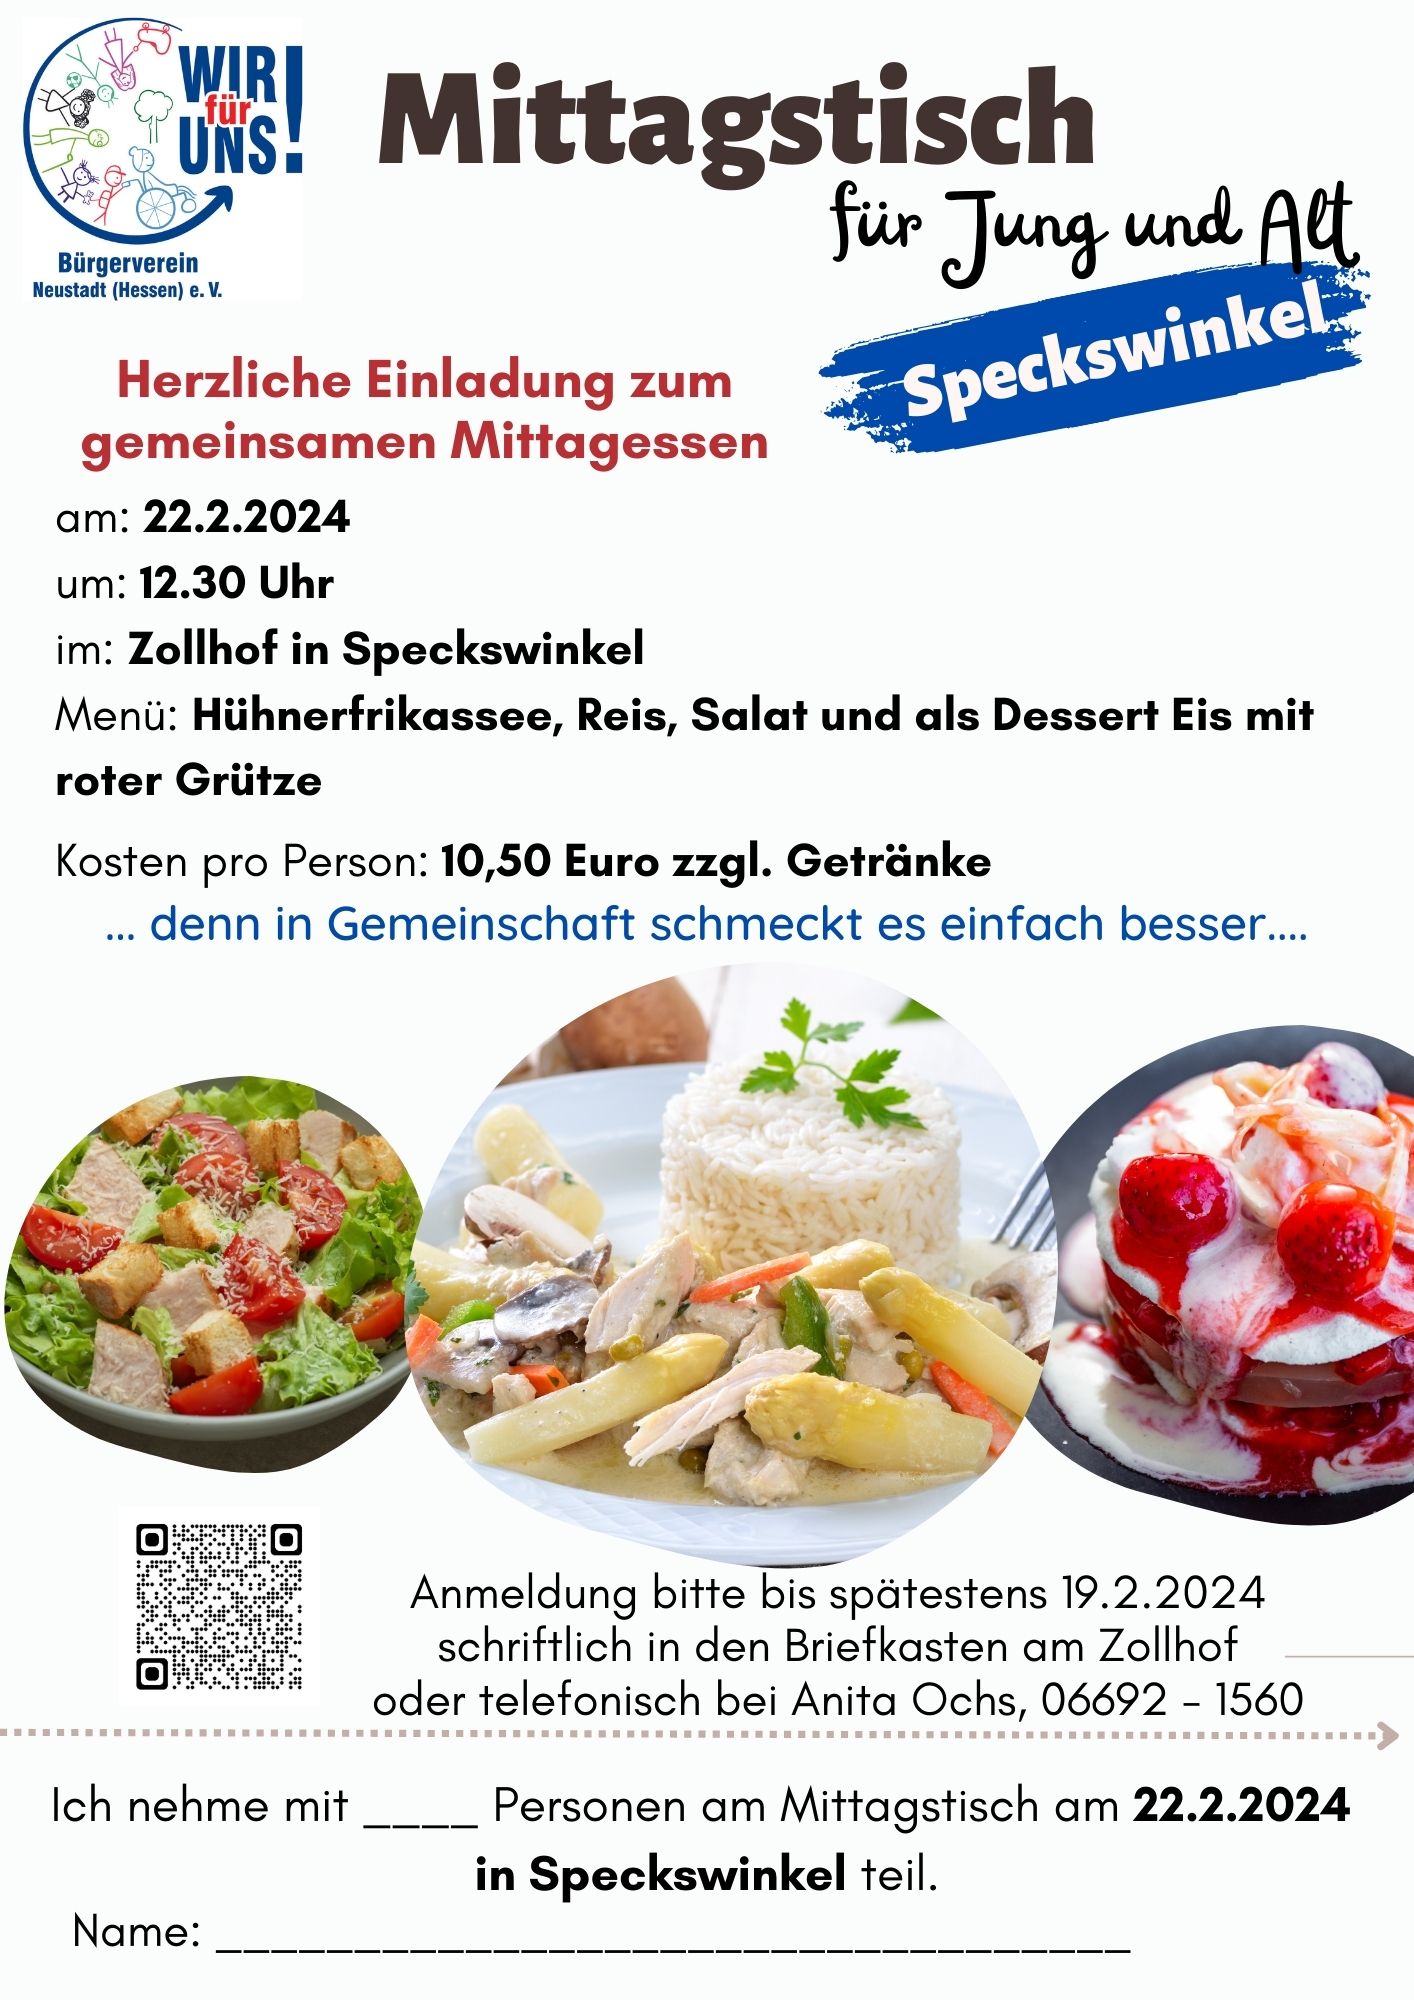 Read more about the article Mittagstisch in Speckswinkel am 22.2.2024